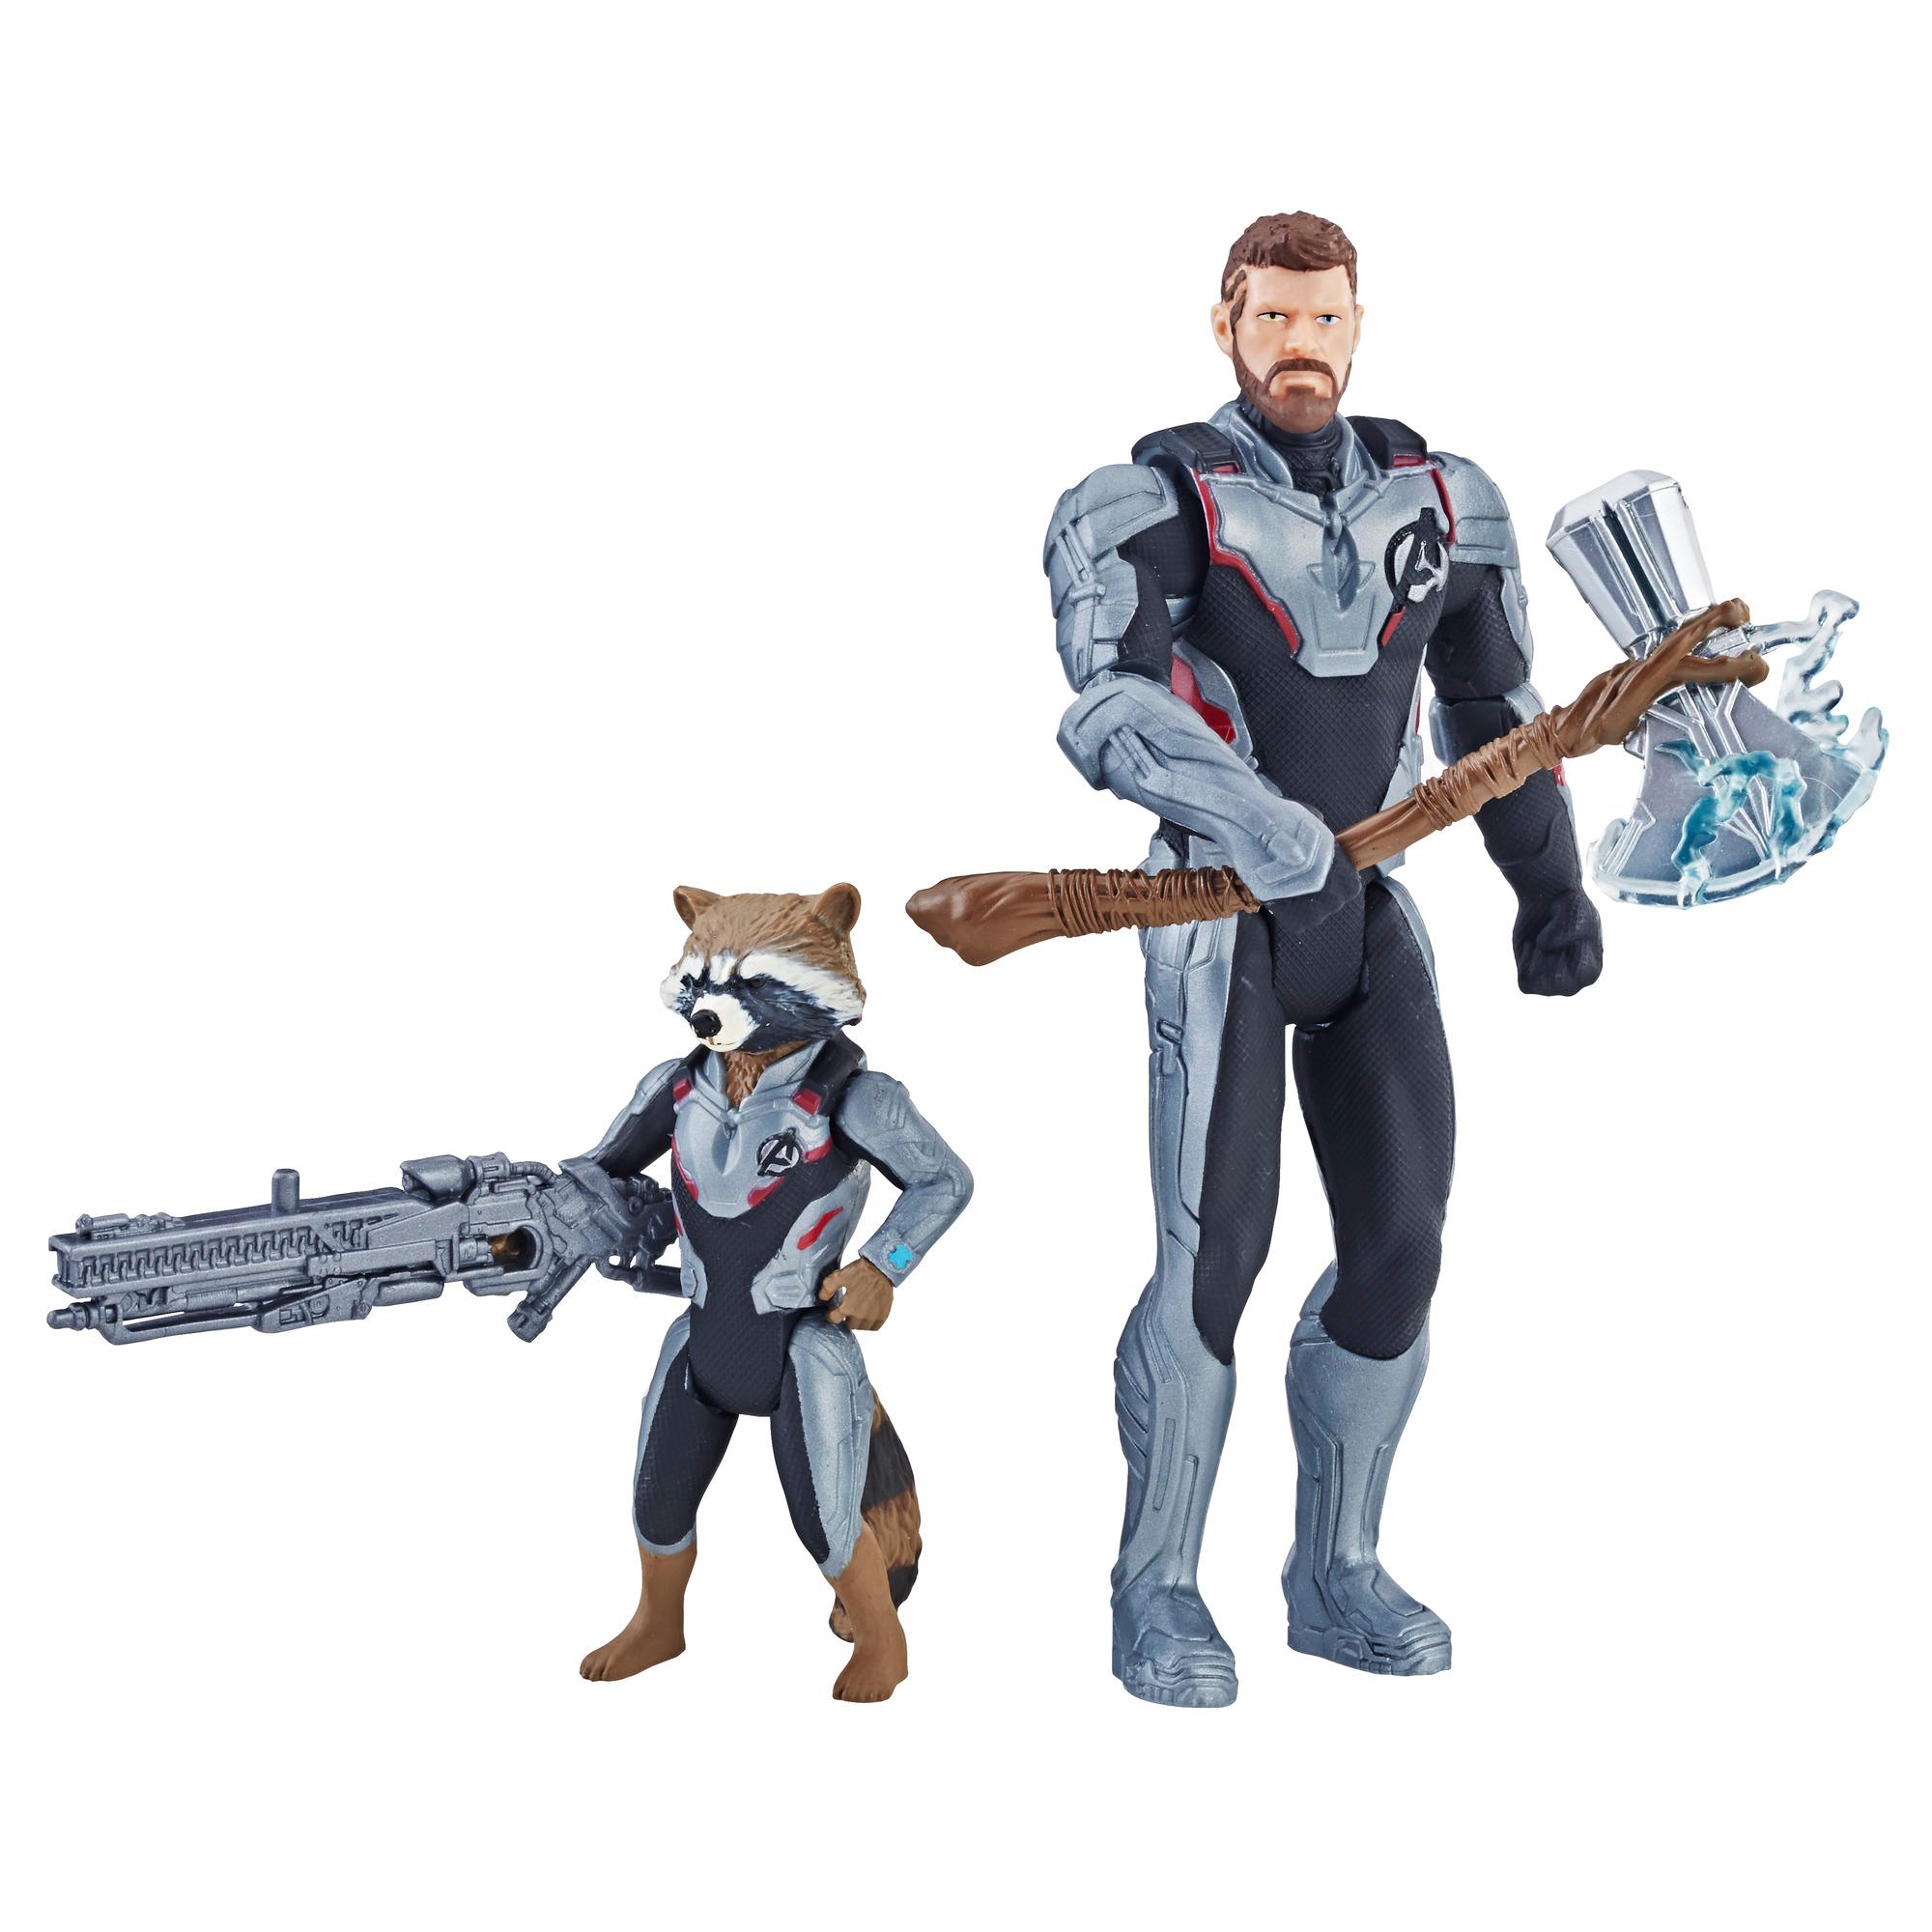 Marvel Avengers: Endgame Thor and Rocket Raccoon 2-pack